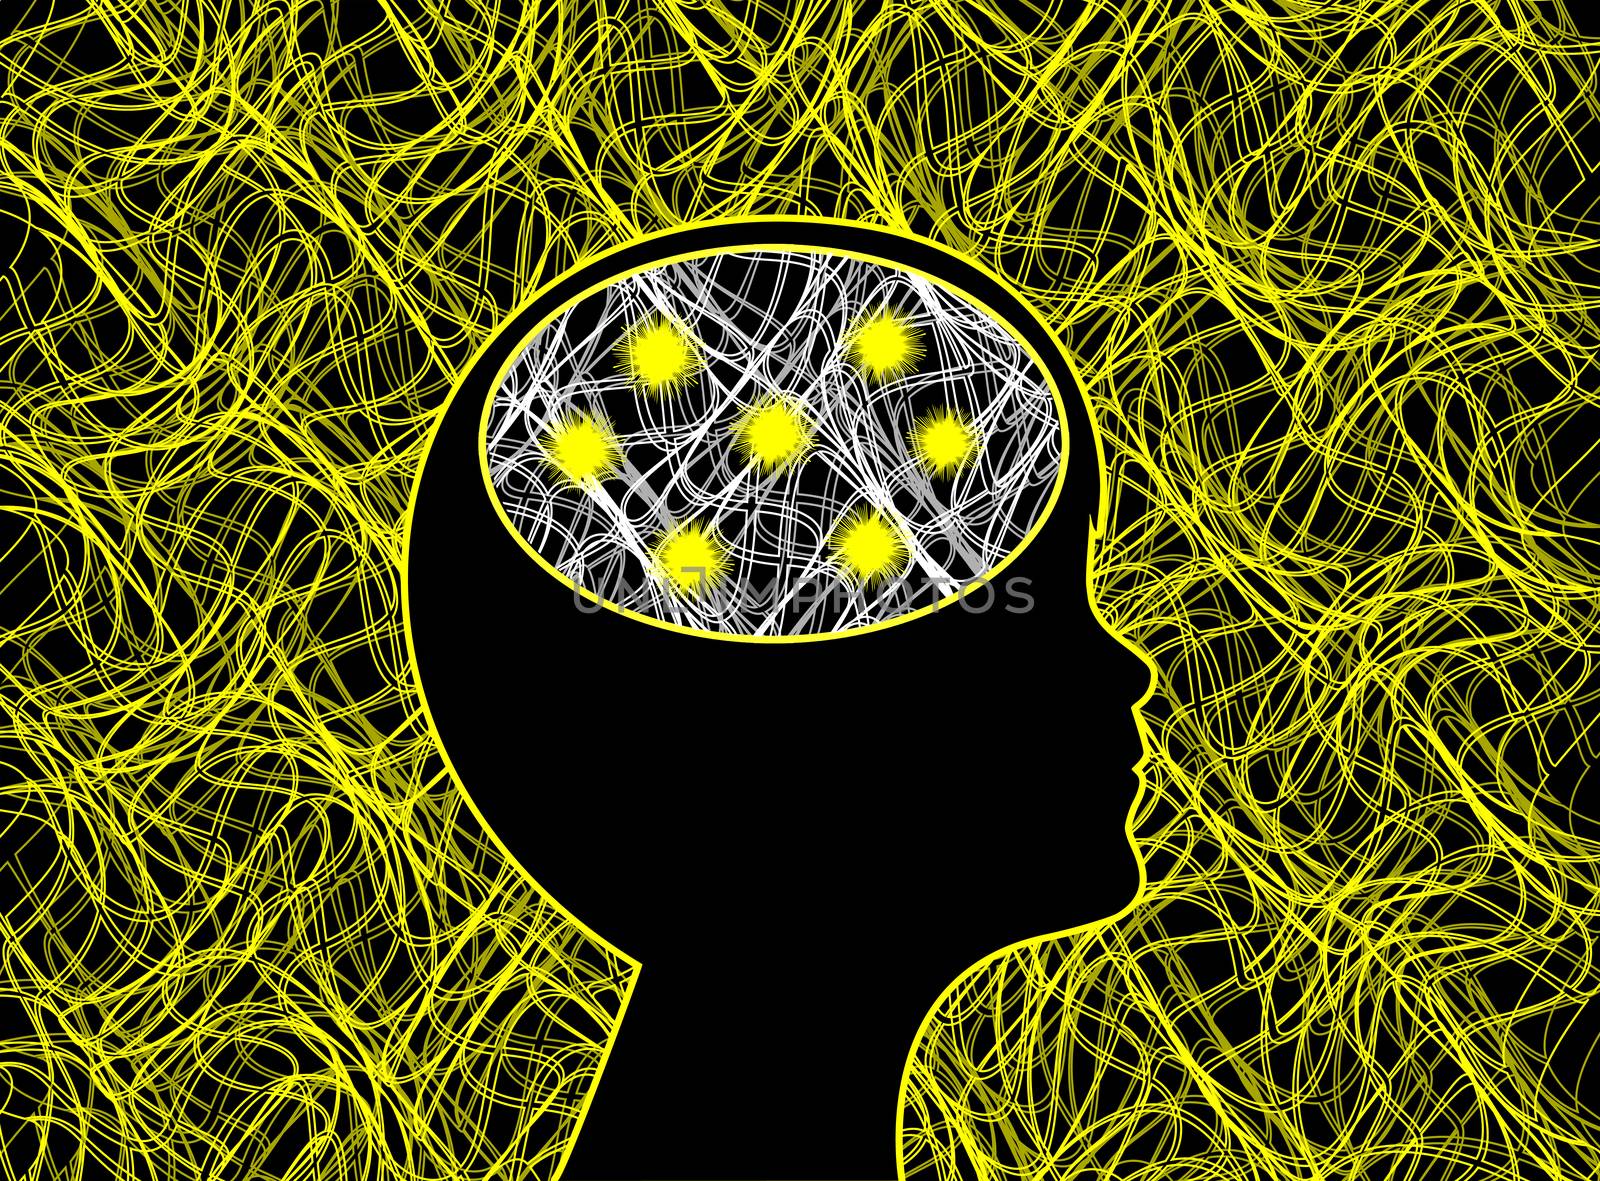 Electrosmog can trigger epileptic seizures